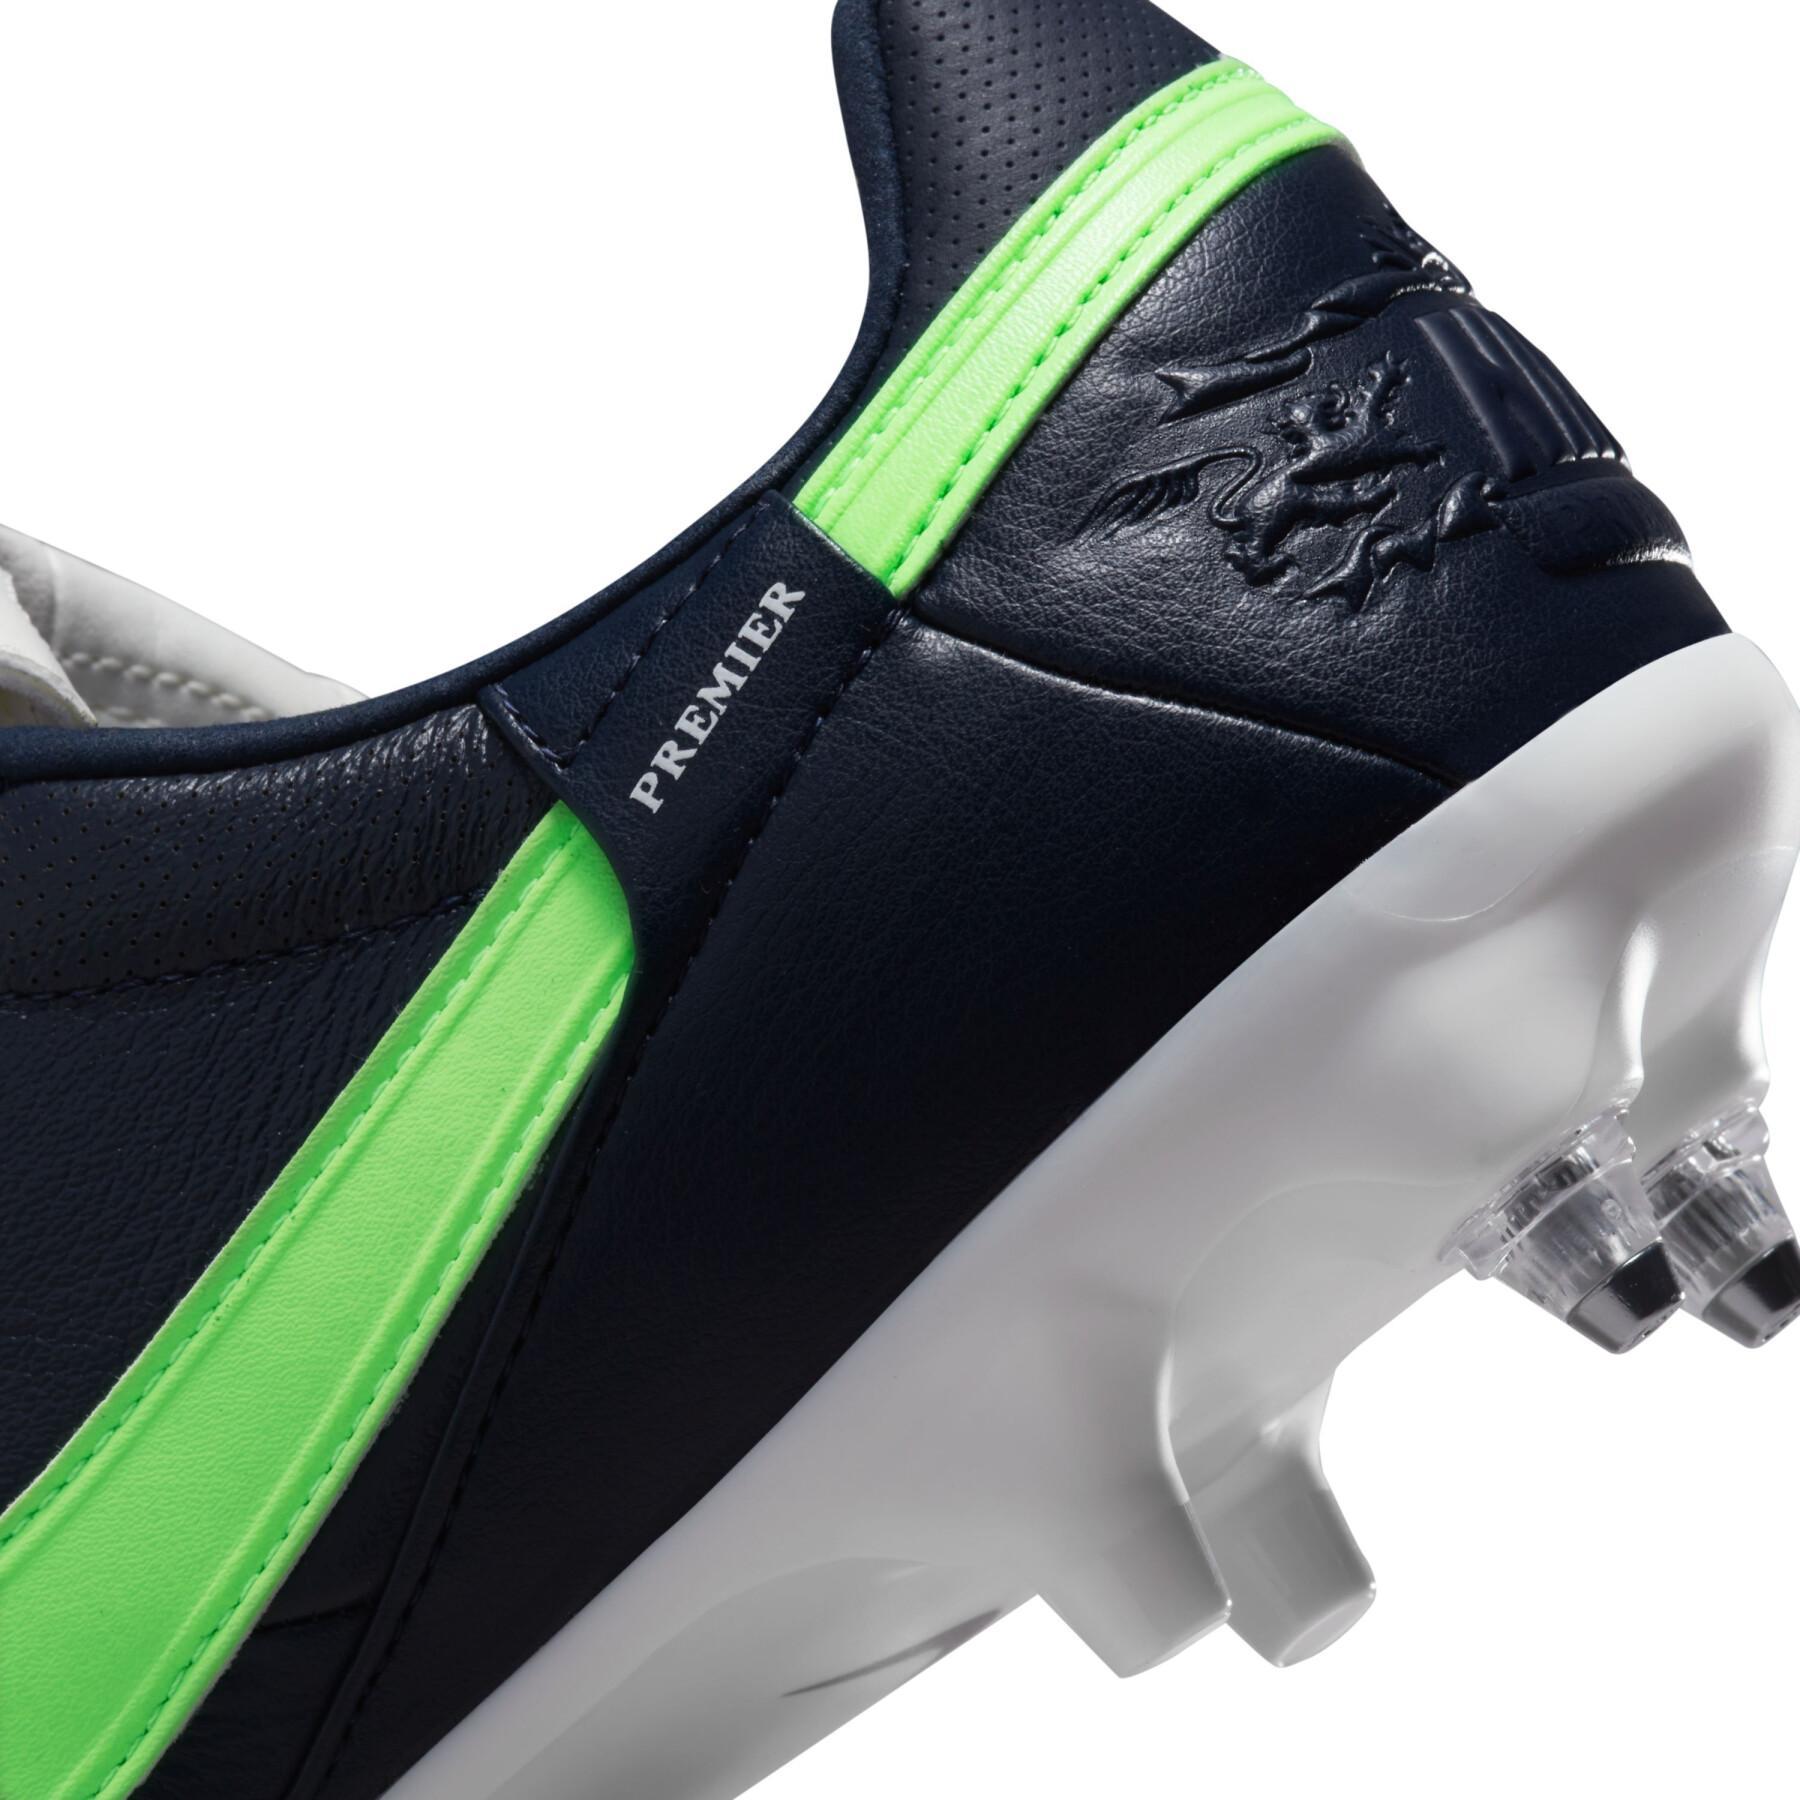 Voetbalschoenen Nike Premier 3 SG-Pro